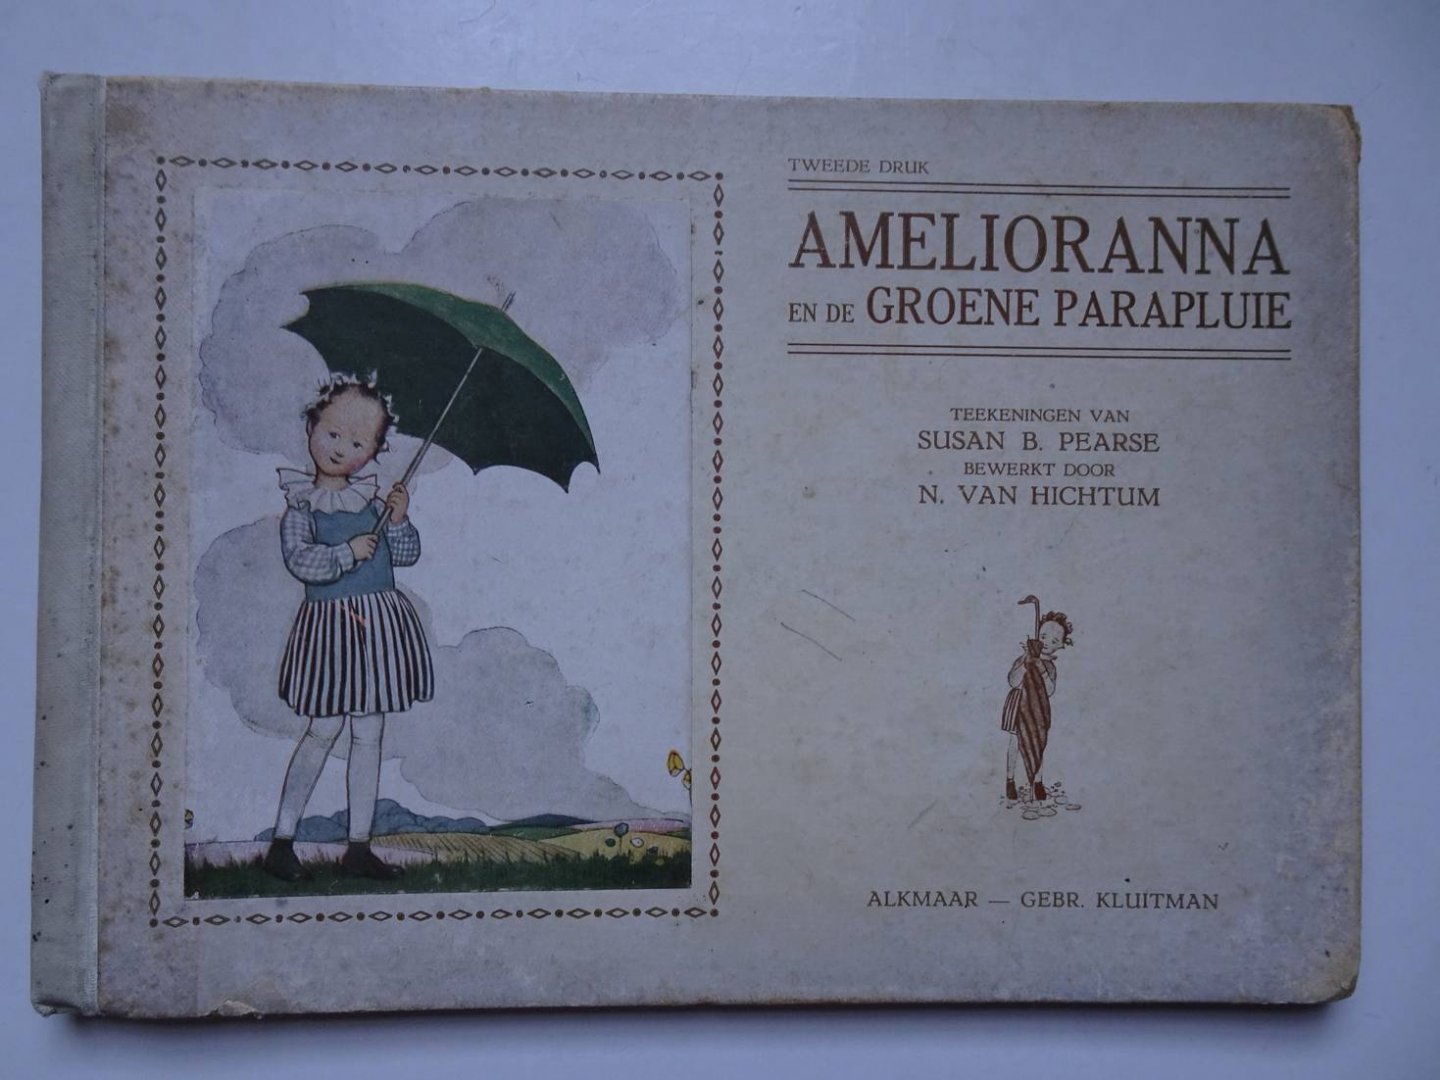 Hichtum, N. van & Susan B. Pearse. - Amelioranna en de groene parapluie.